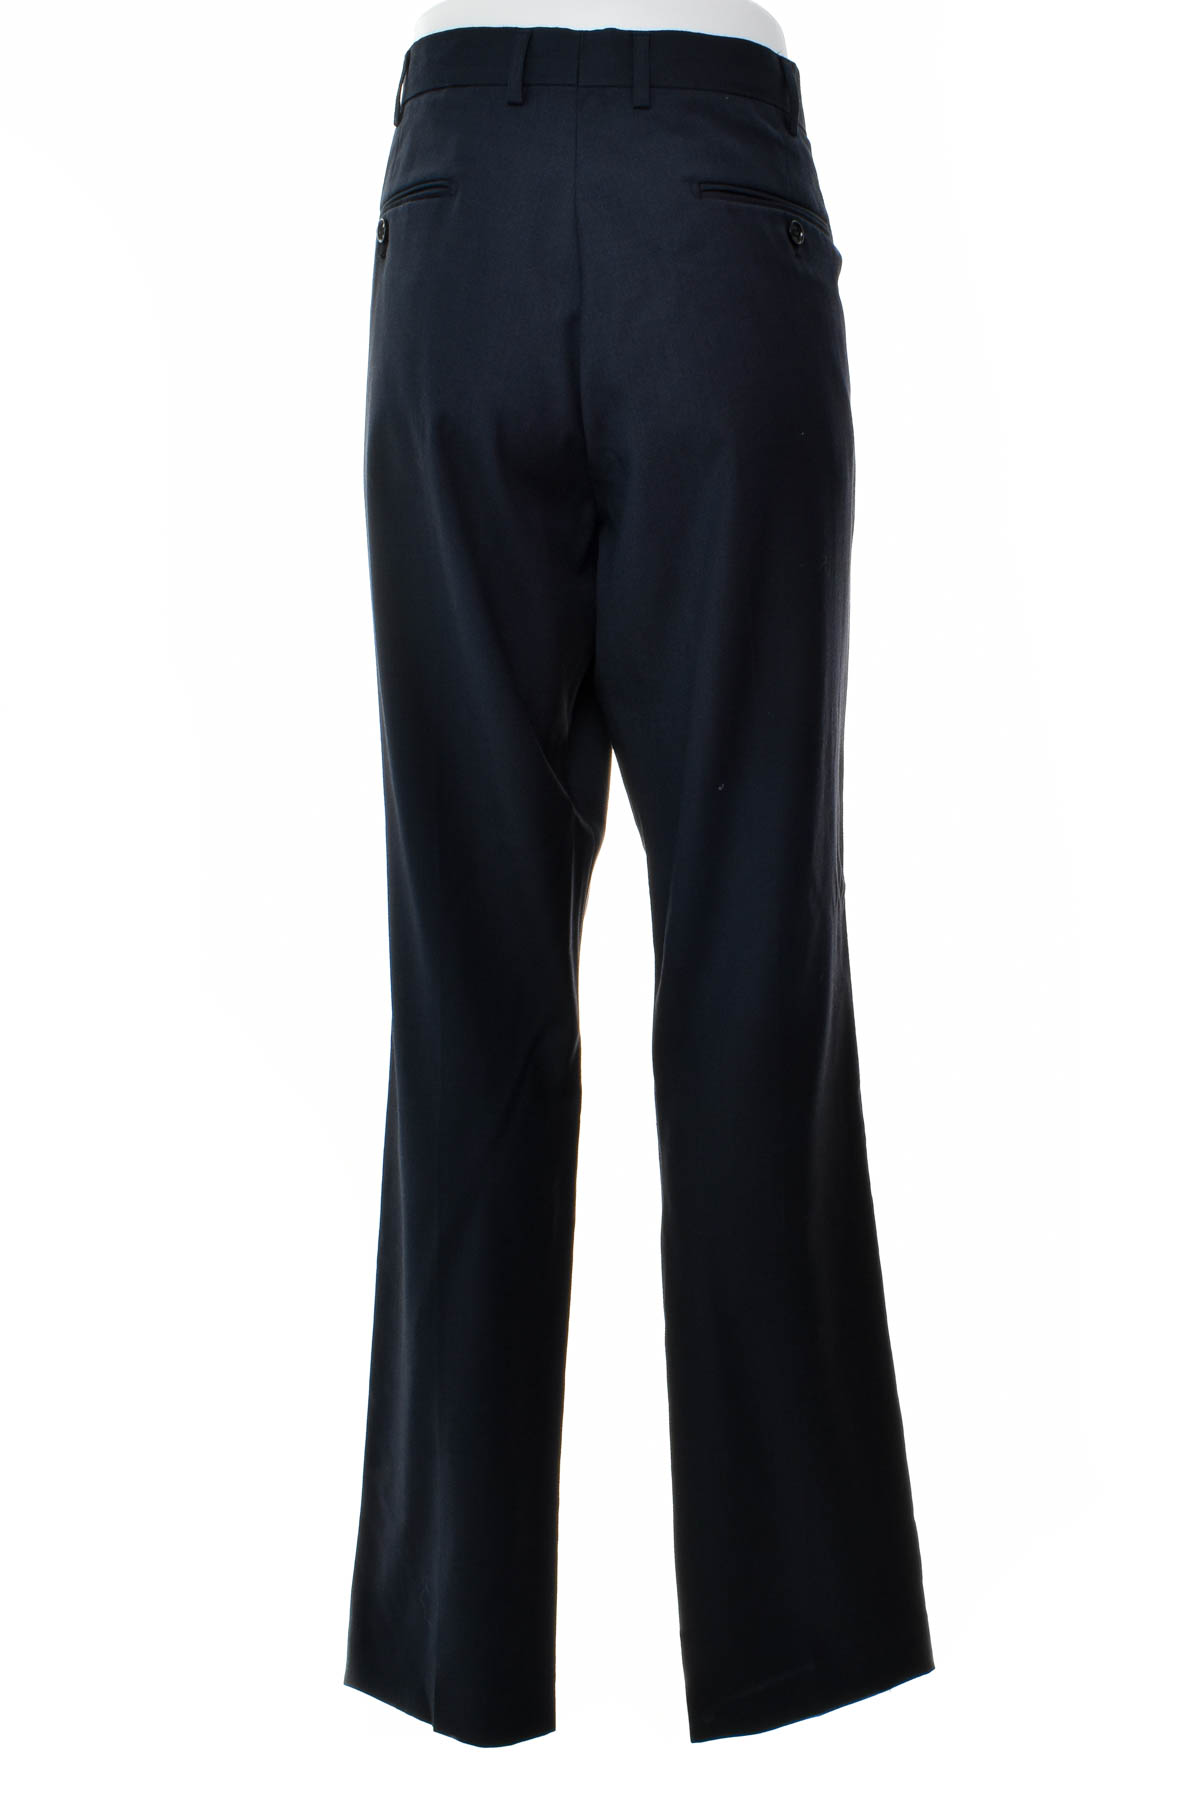 Pantalon pentru bărbați - Shoreditch - 1